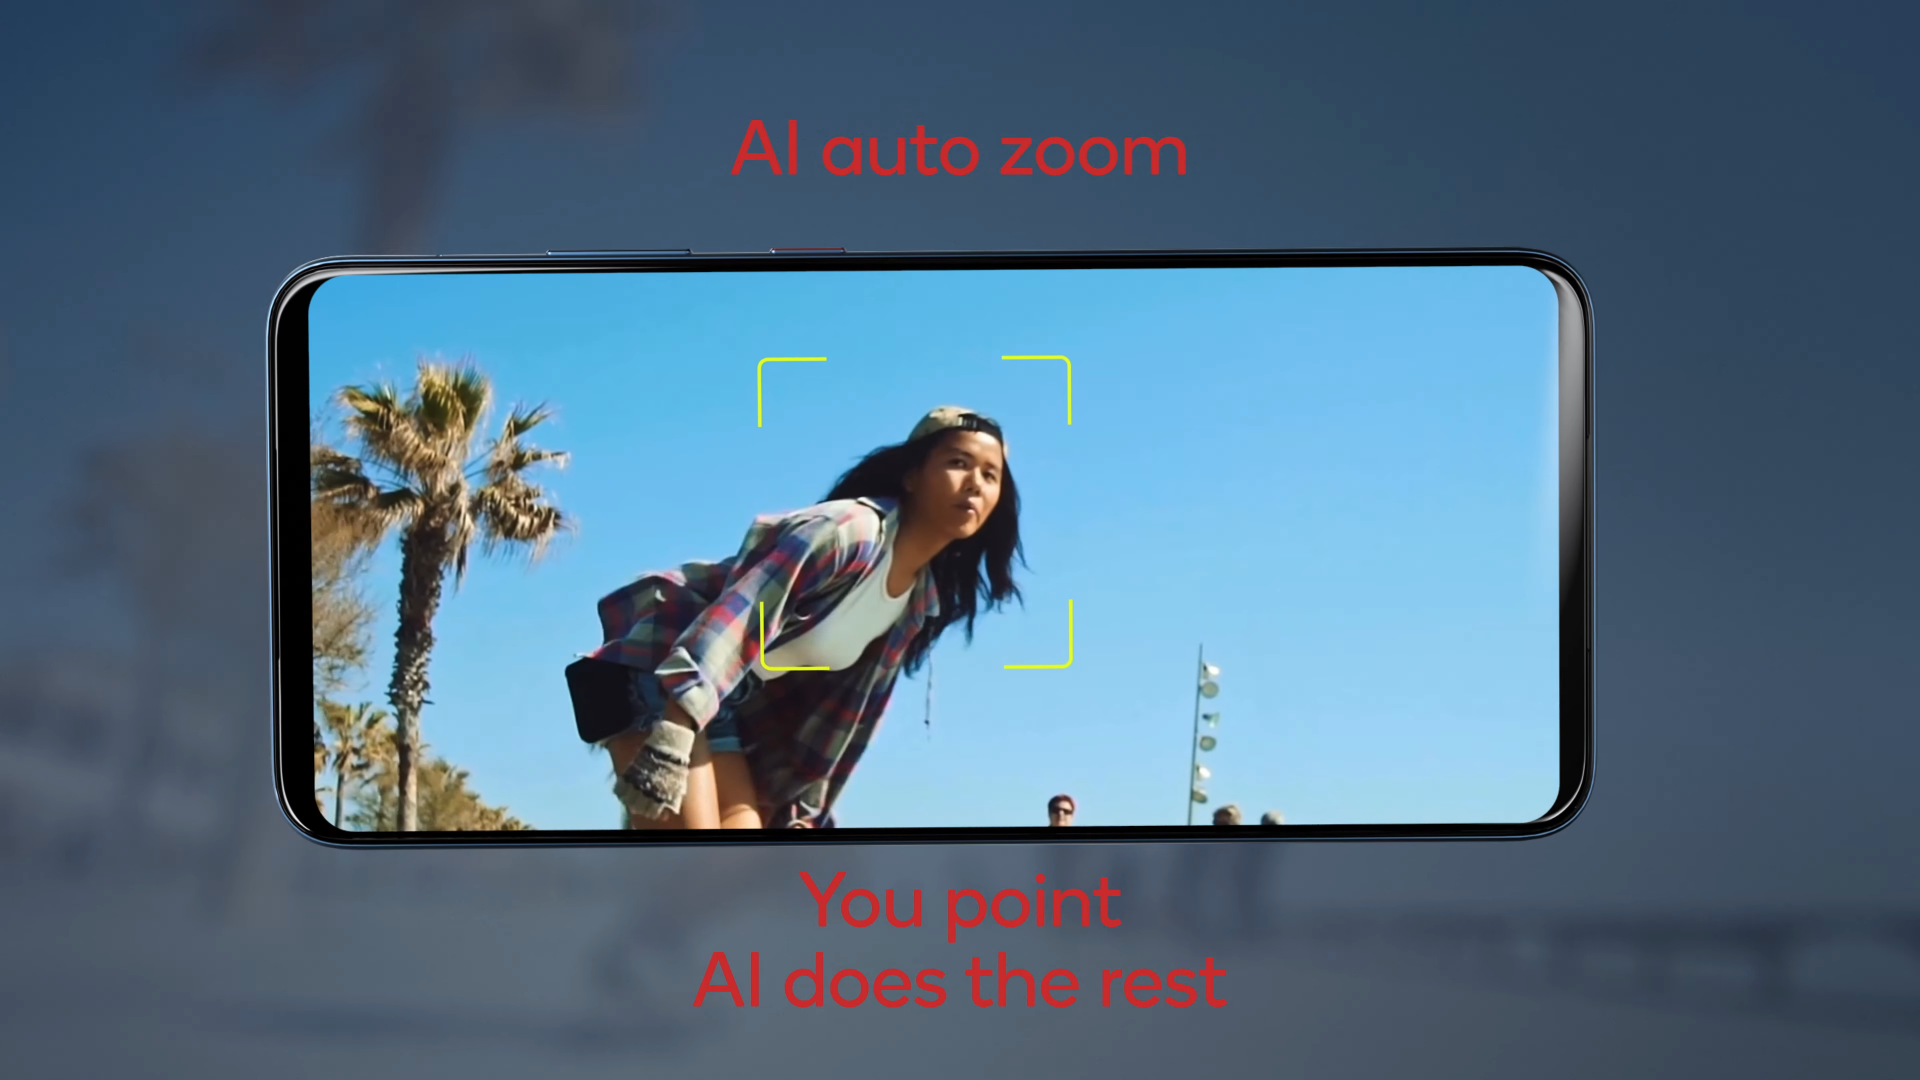 IA fornece zoom automático.